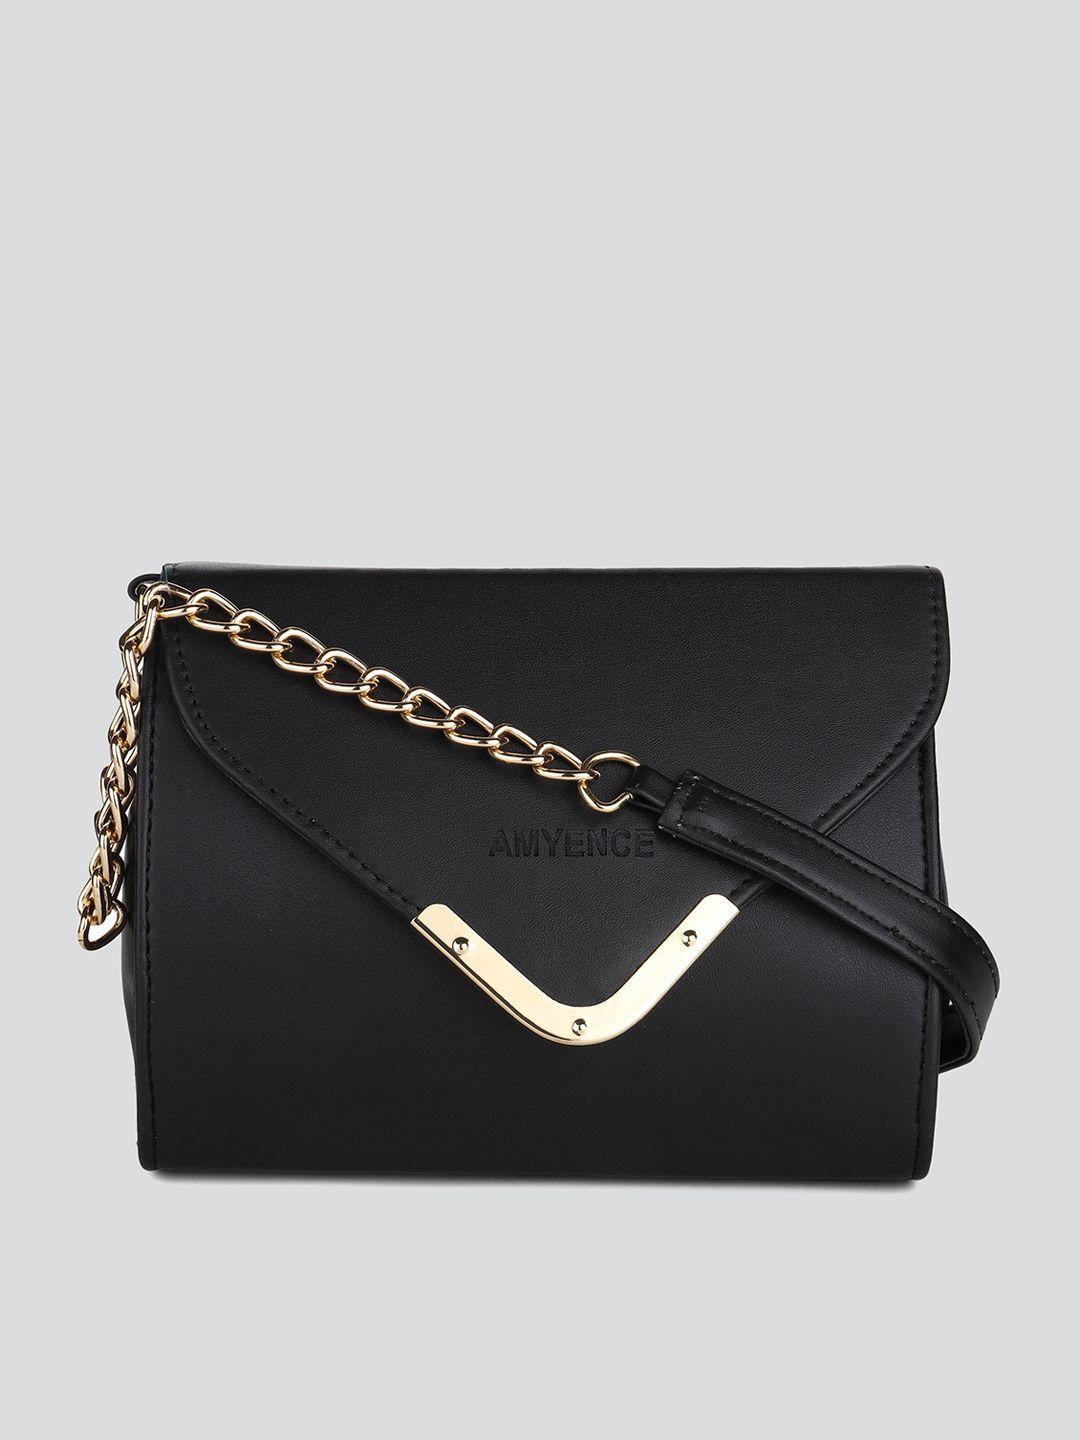 amyence black structured sling bag